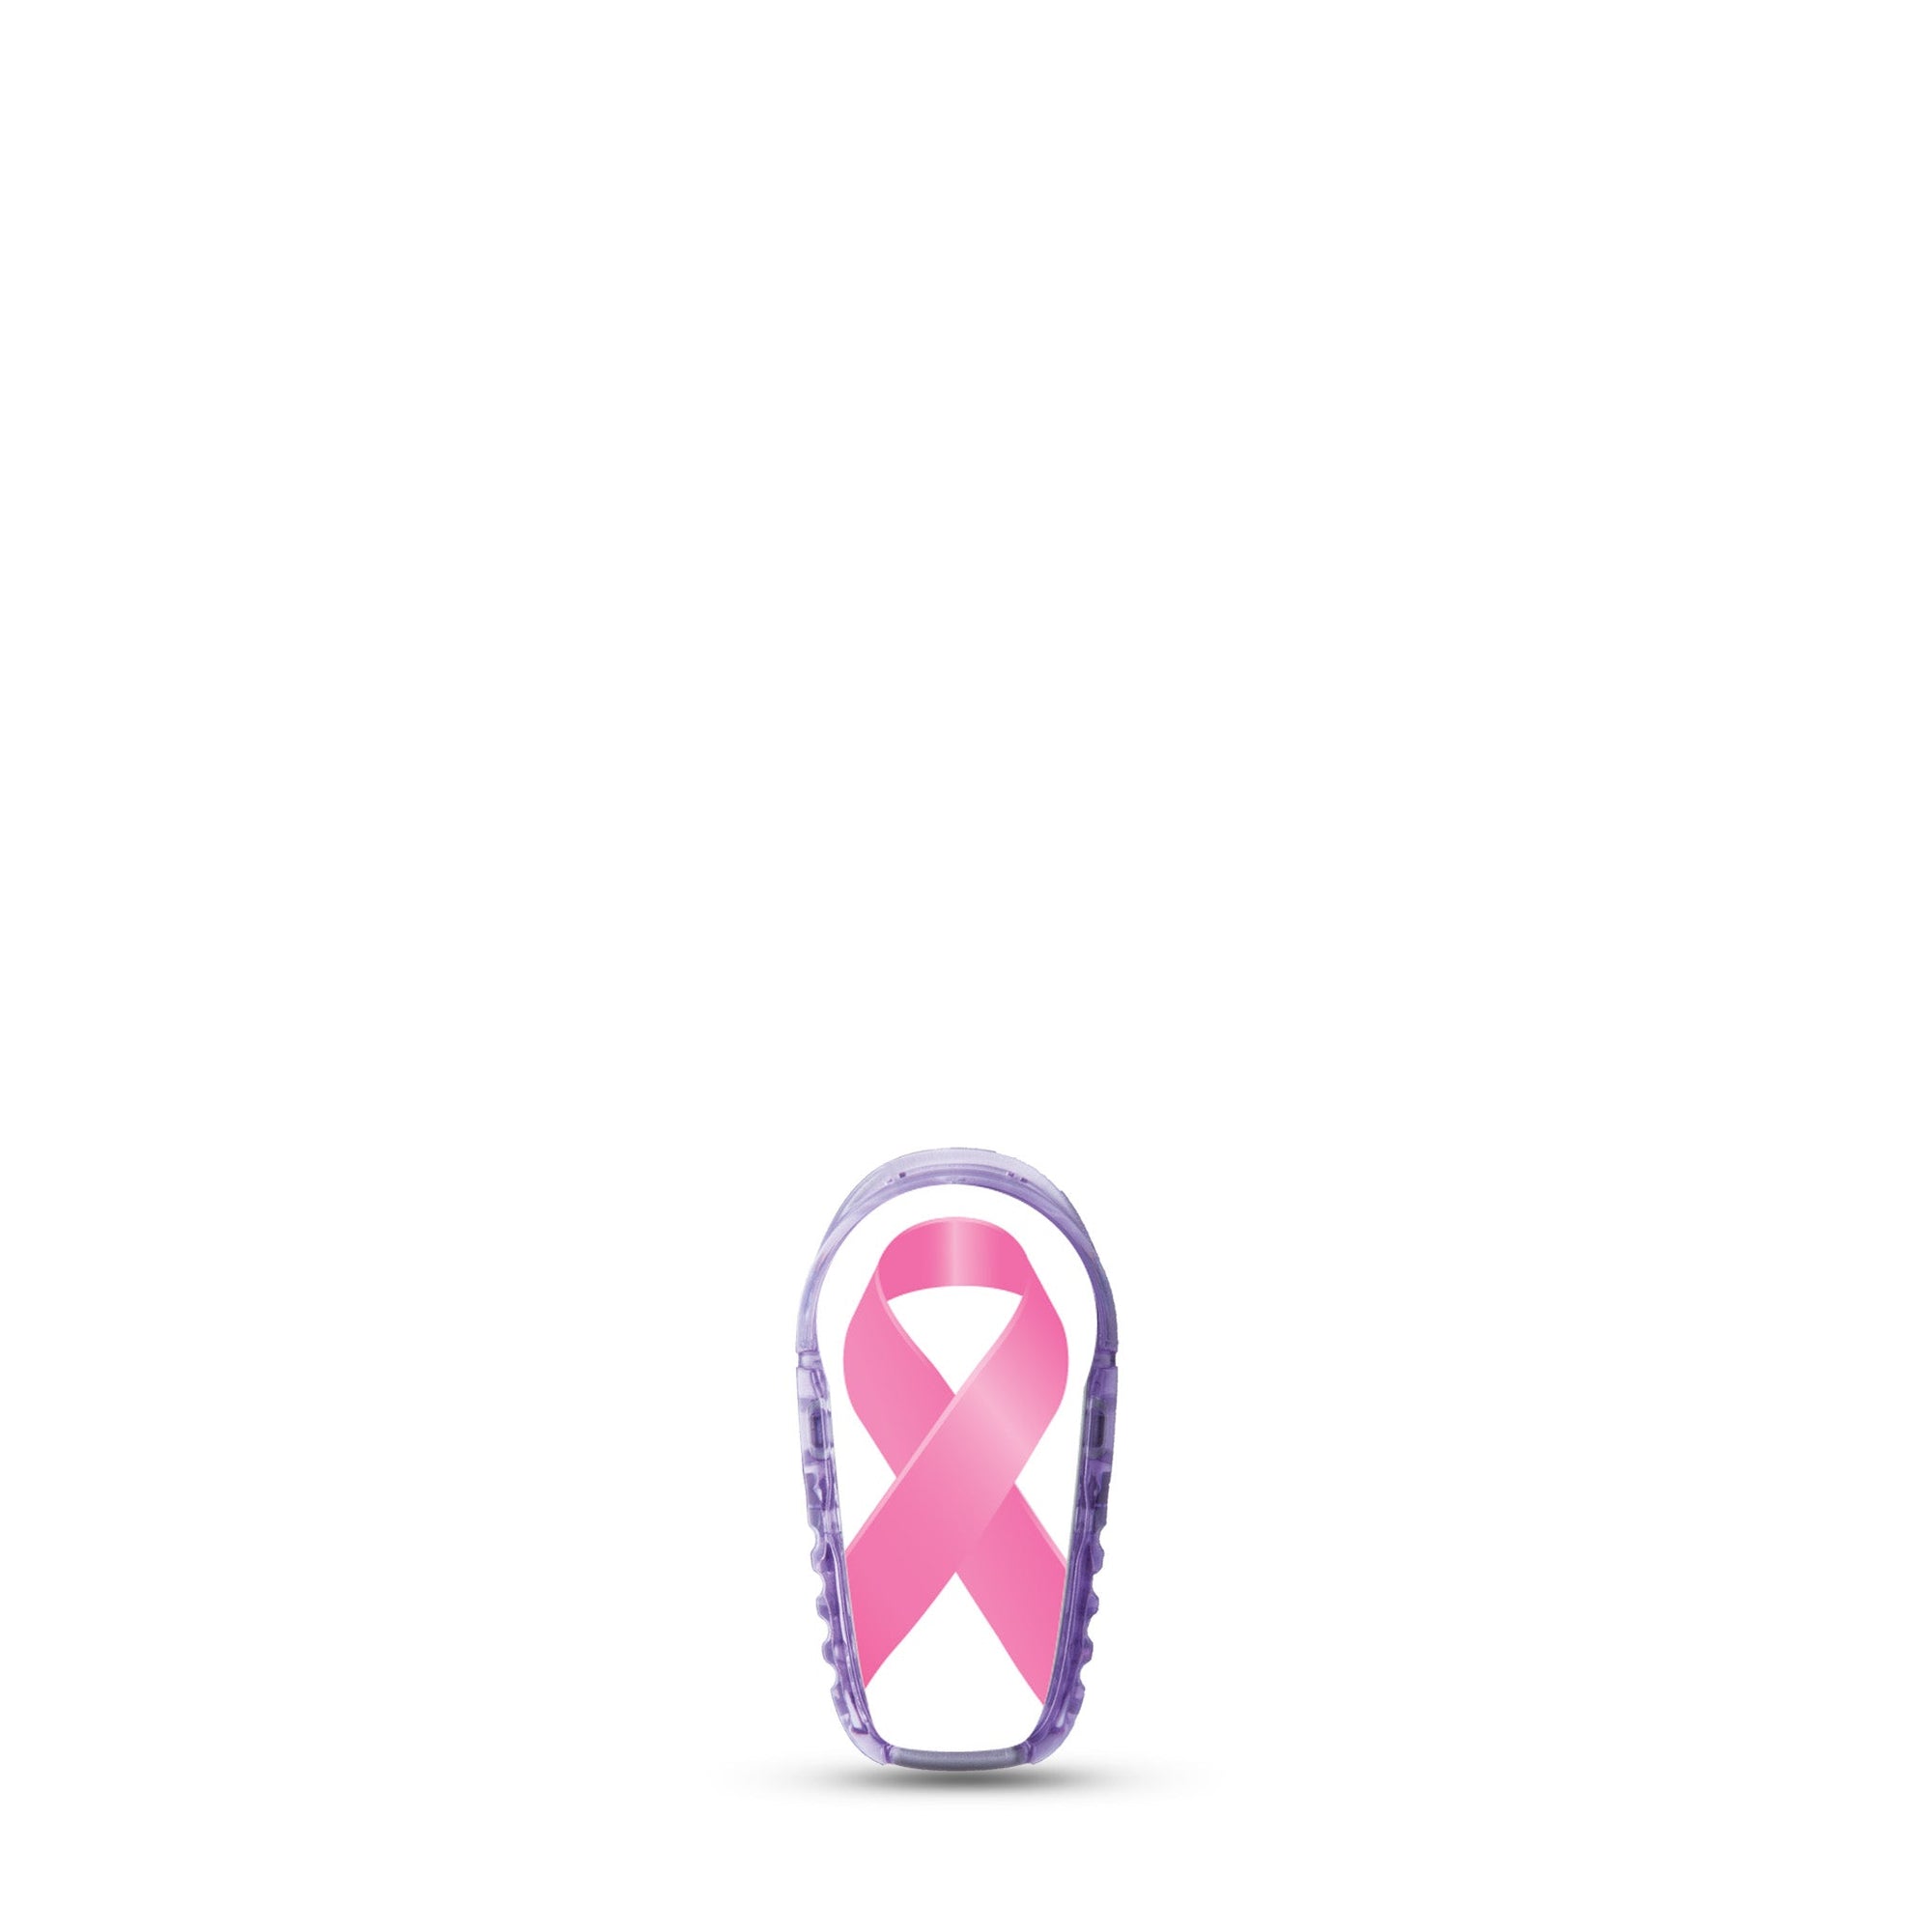 ExpressionMed Breast Cancer Awareness Dexcom G6 Sticker Pink Ribbon, CGM Adhesive Sticker Design